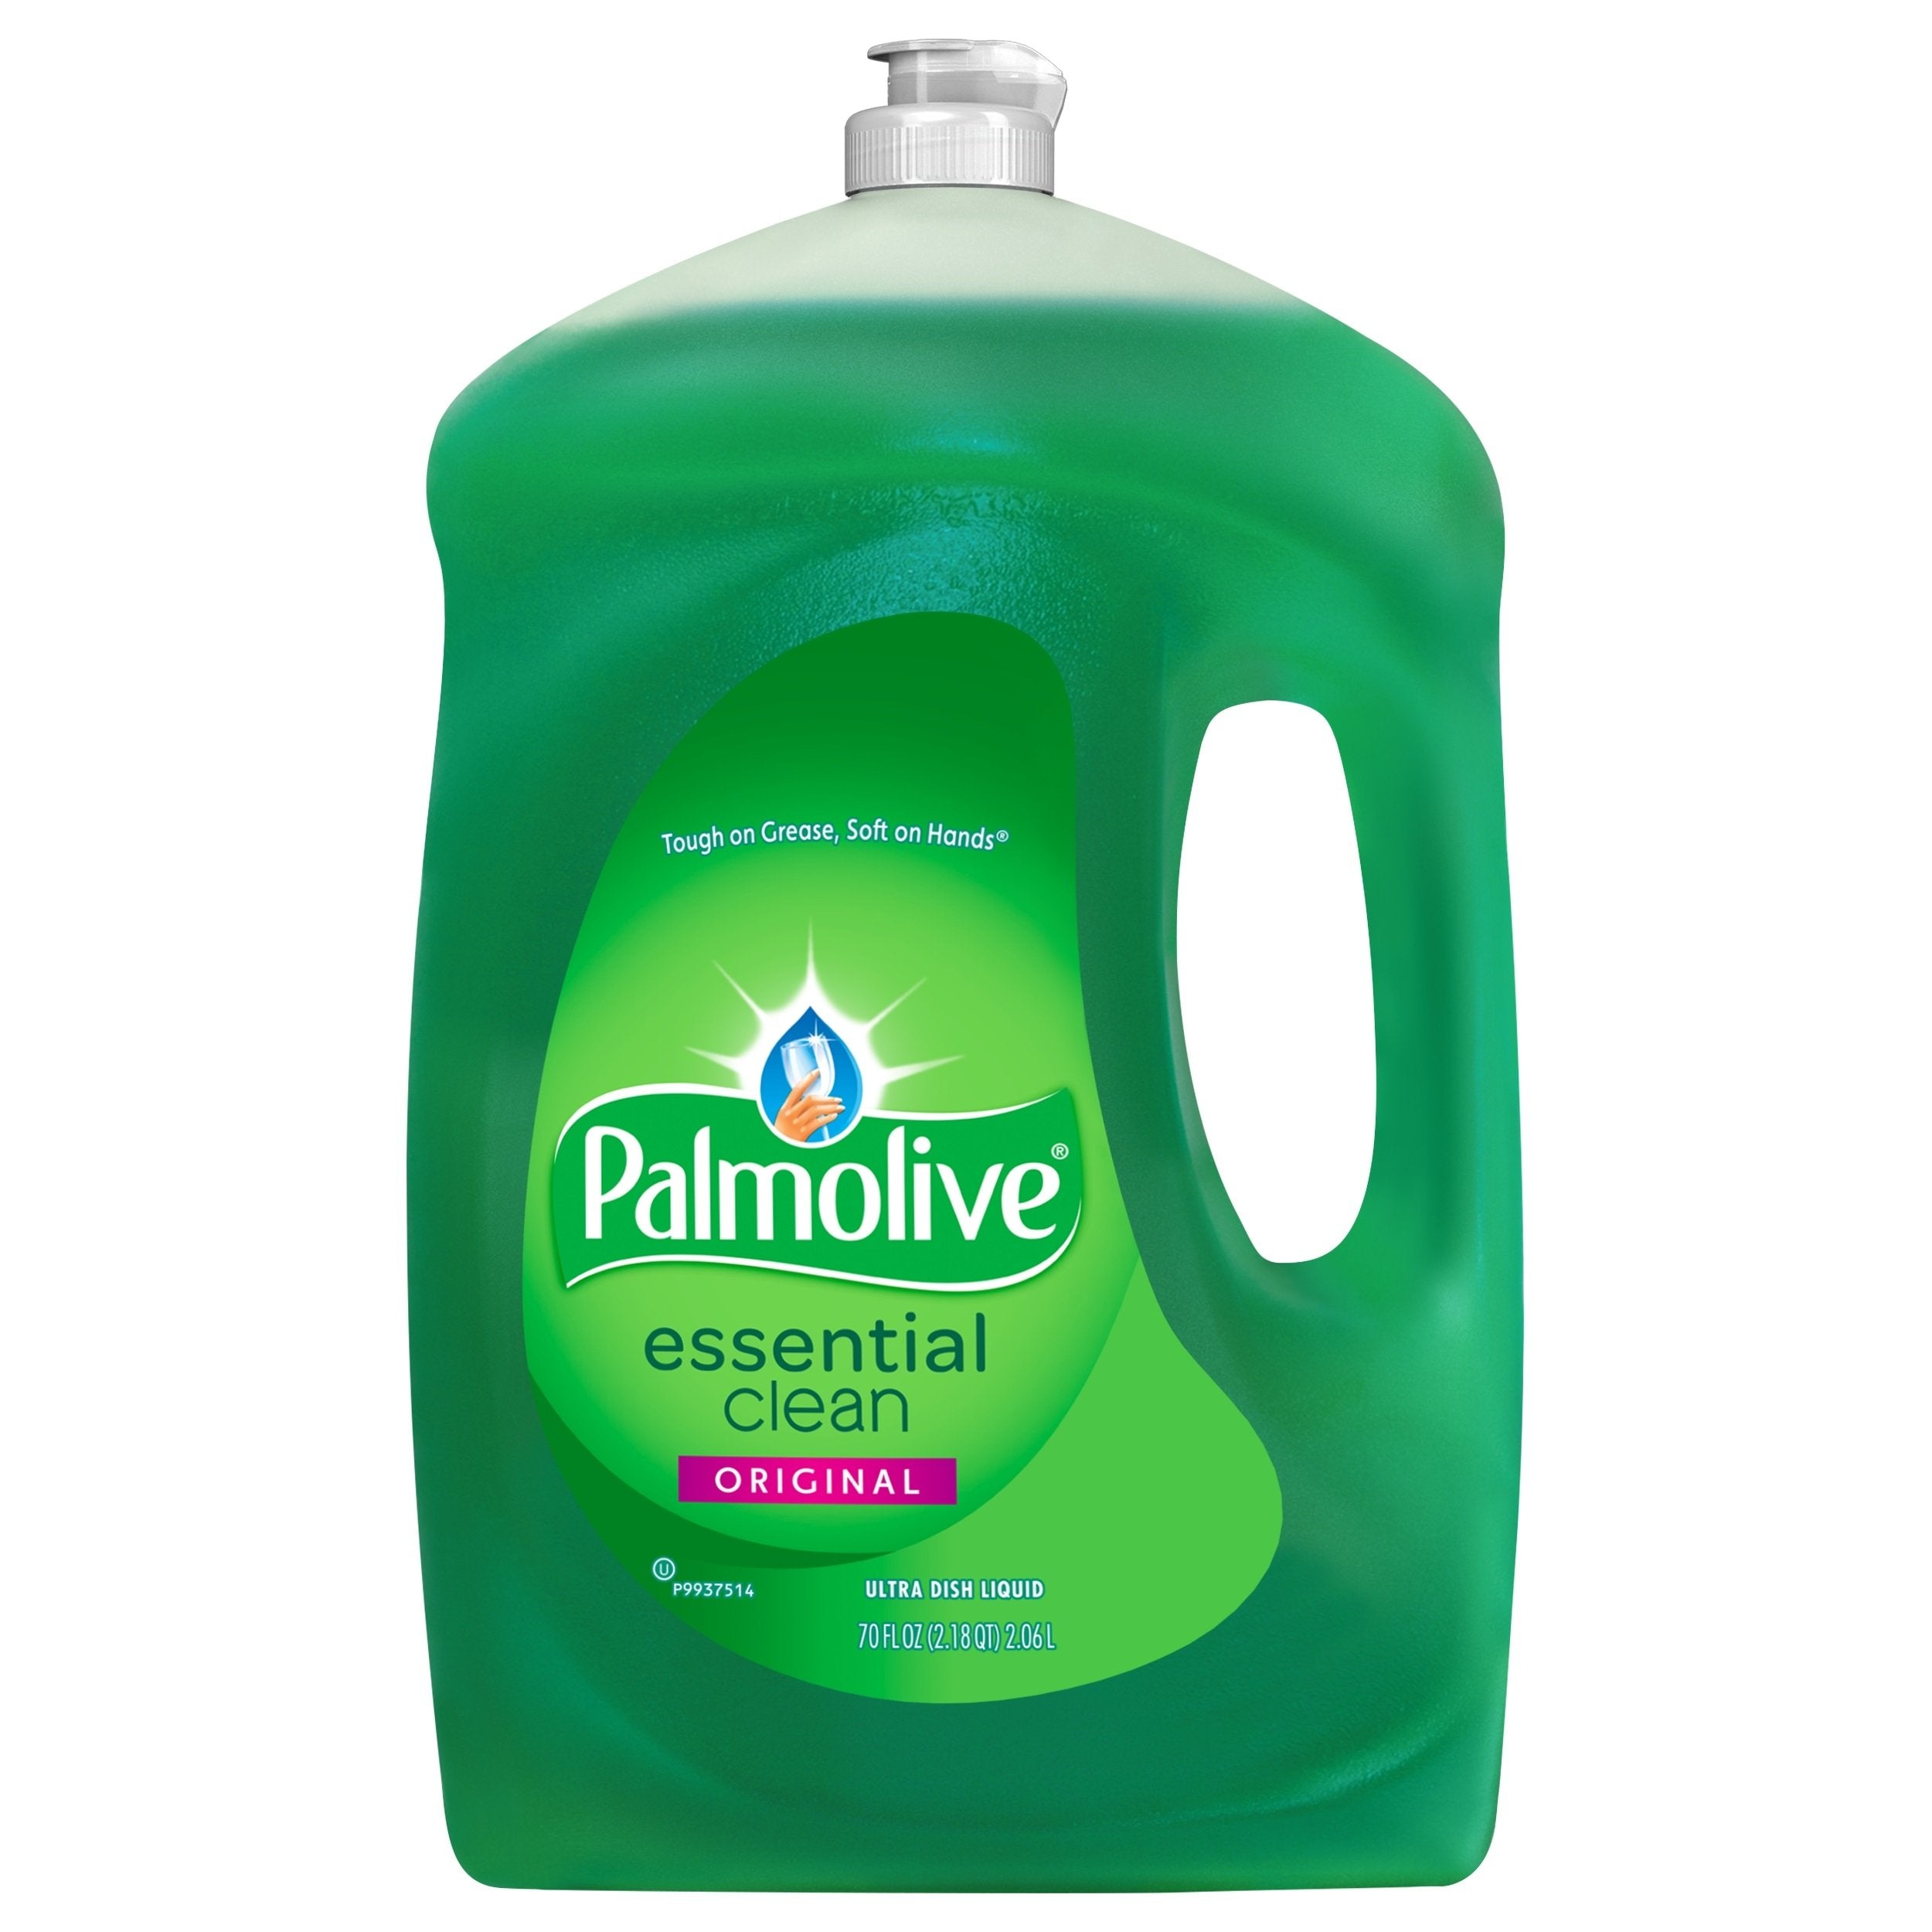 Palmolive - Liquid Dish Soap, Original Scent, 70 Fluid Ounce - Case of 4